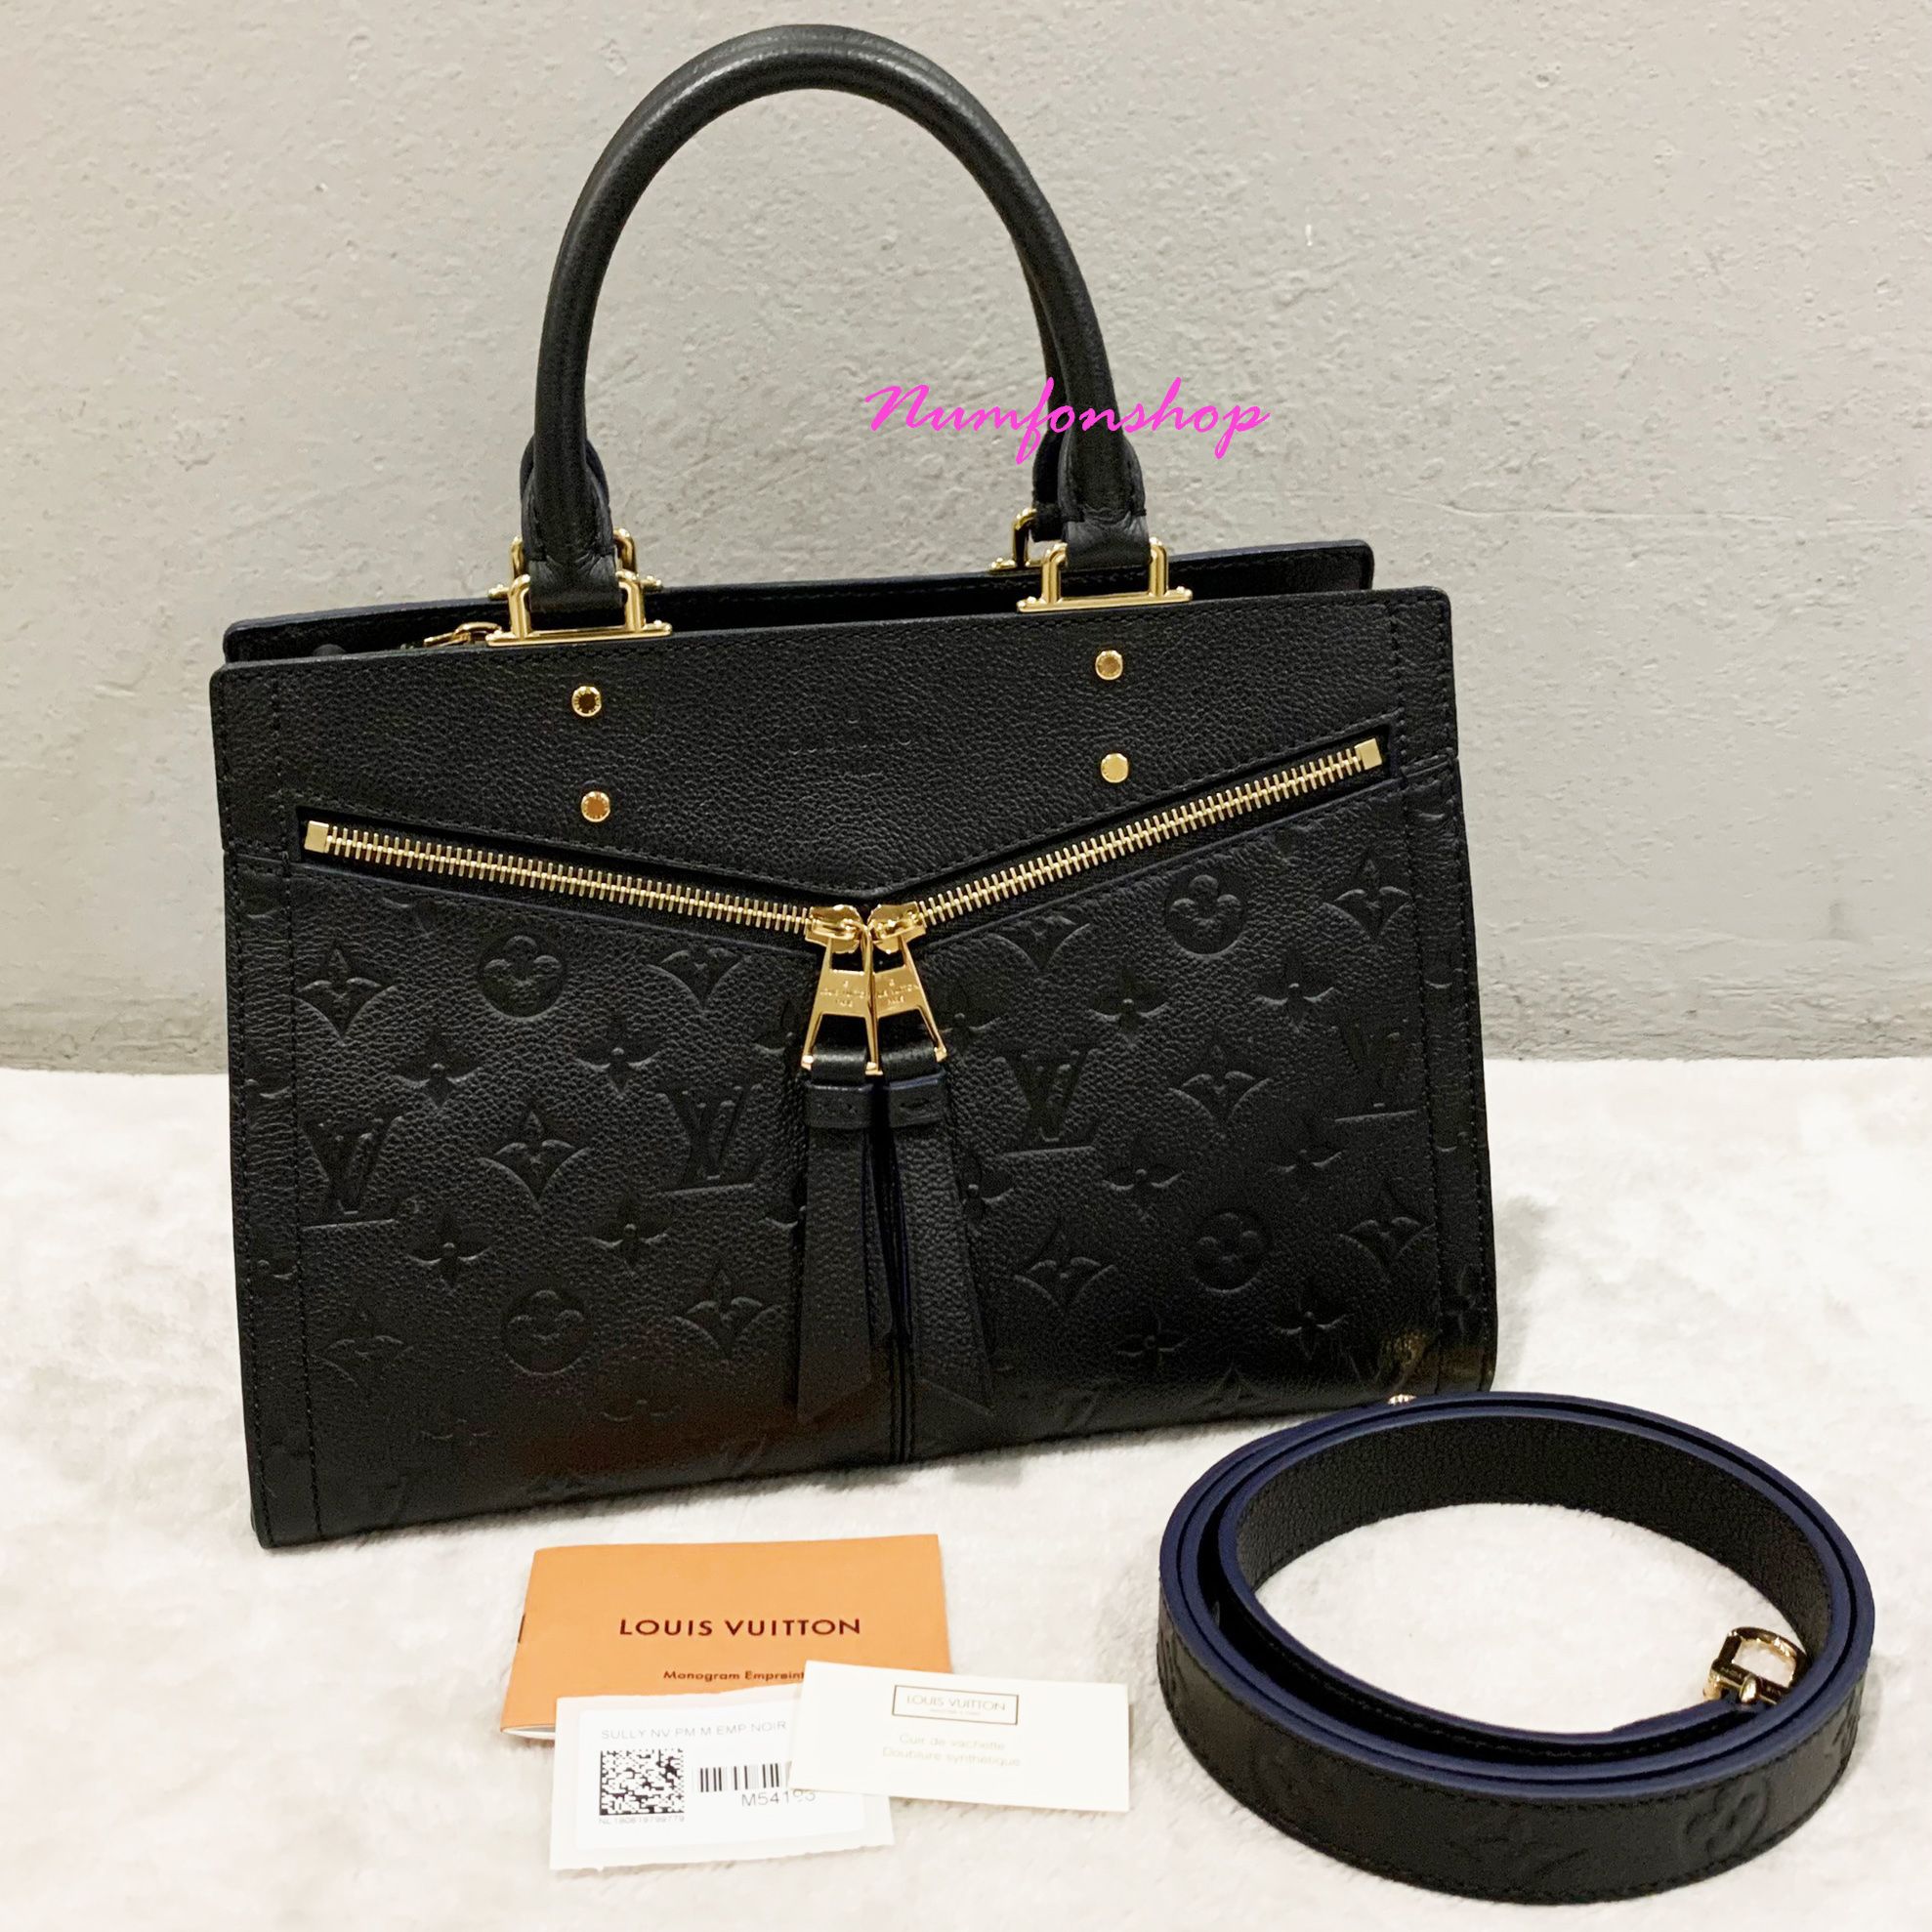 Louis Vuitton Sully Empreinte PM Handbag in Noir (Black)